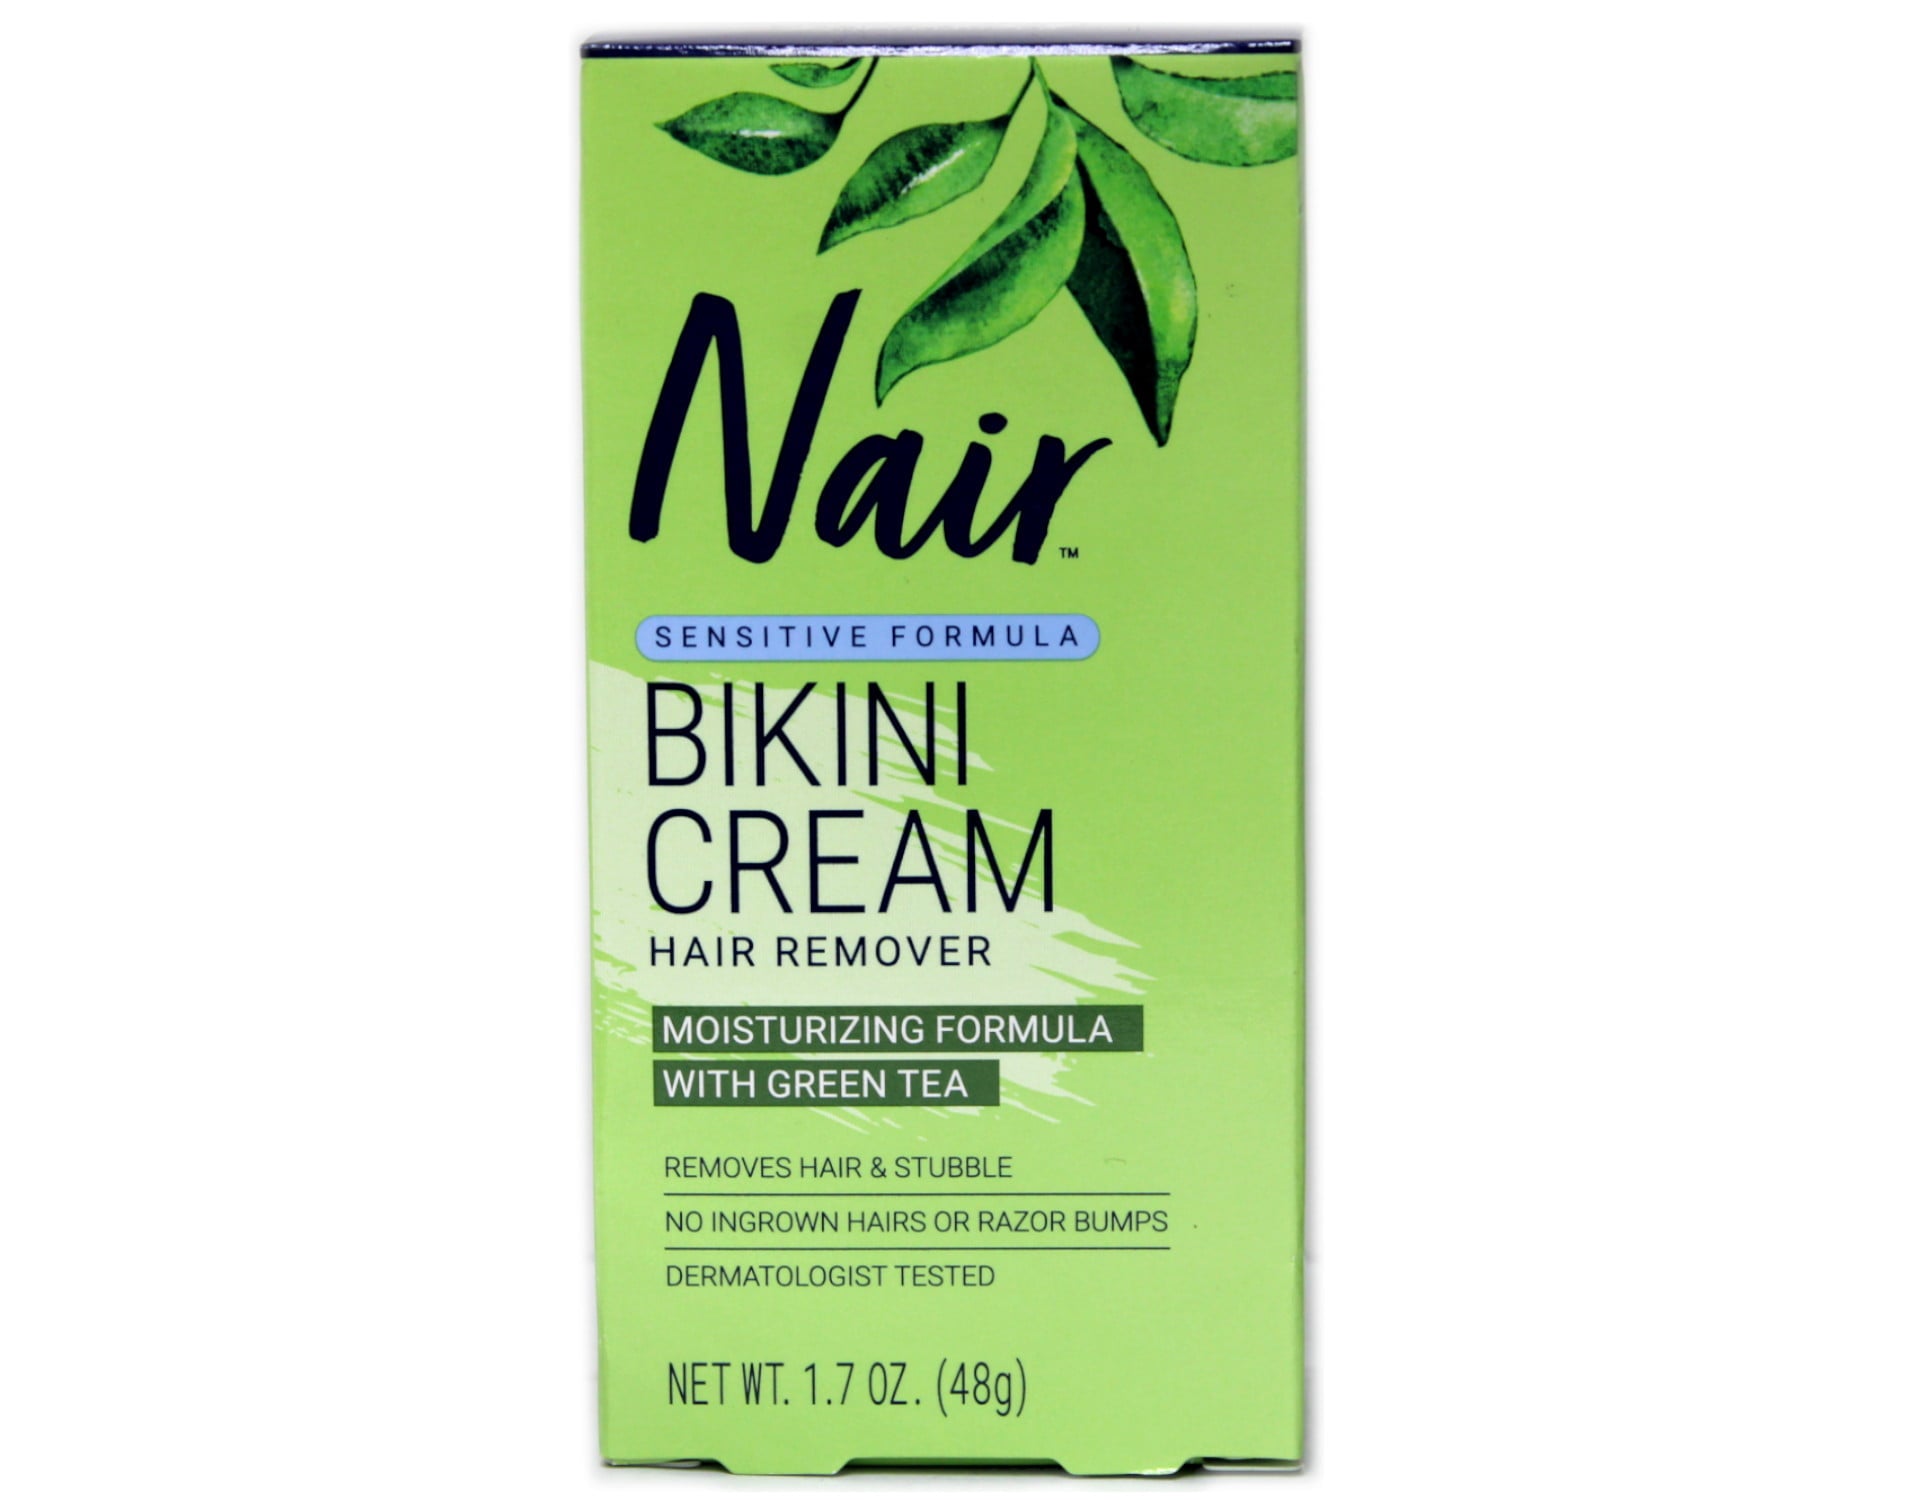 Nair Sensitive Formula Bikini Cream Hair Removal Moisturizing Formula With Green Tea 1.7 oz